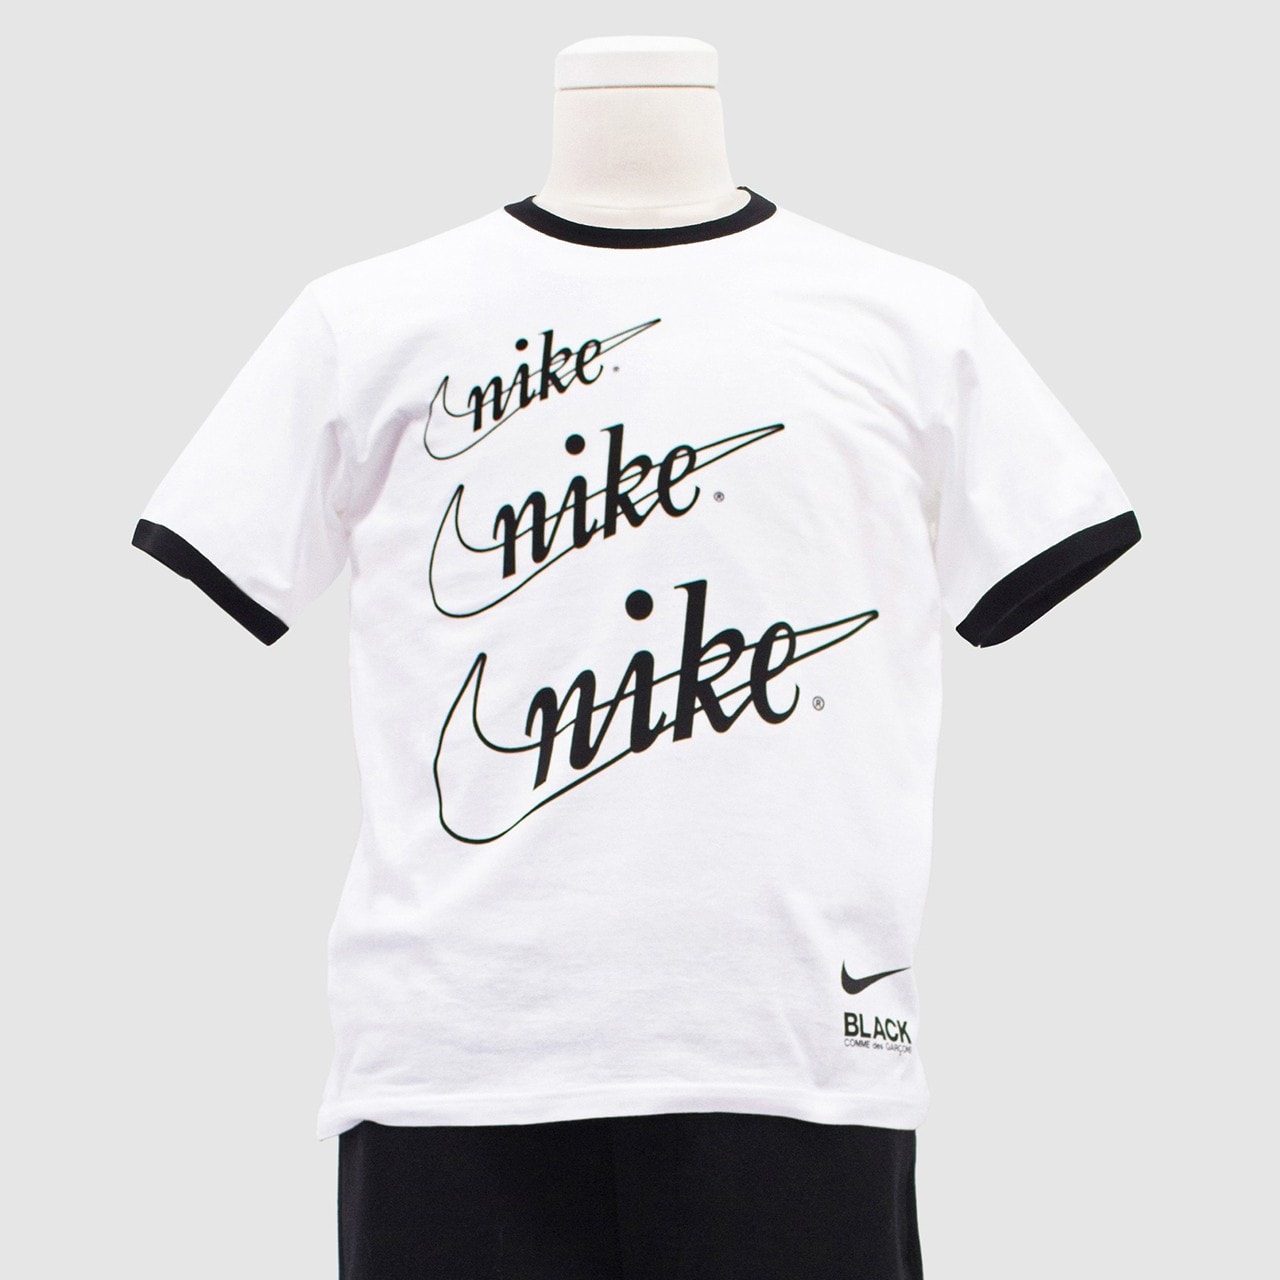 BLACK COMME des GARÇONS x Nike 2020 秋冬系列聯乘 T-Shirt 發佈